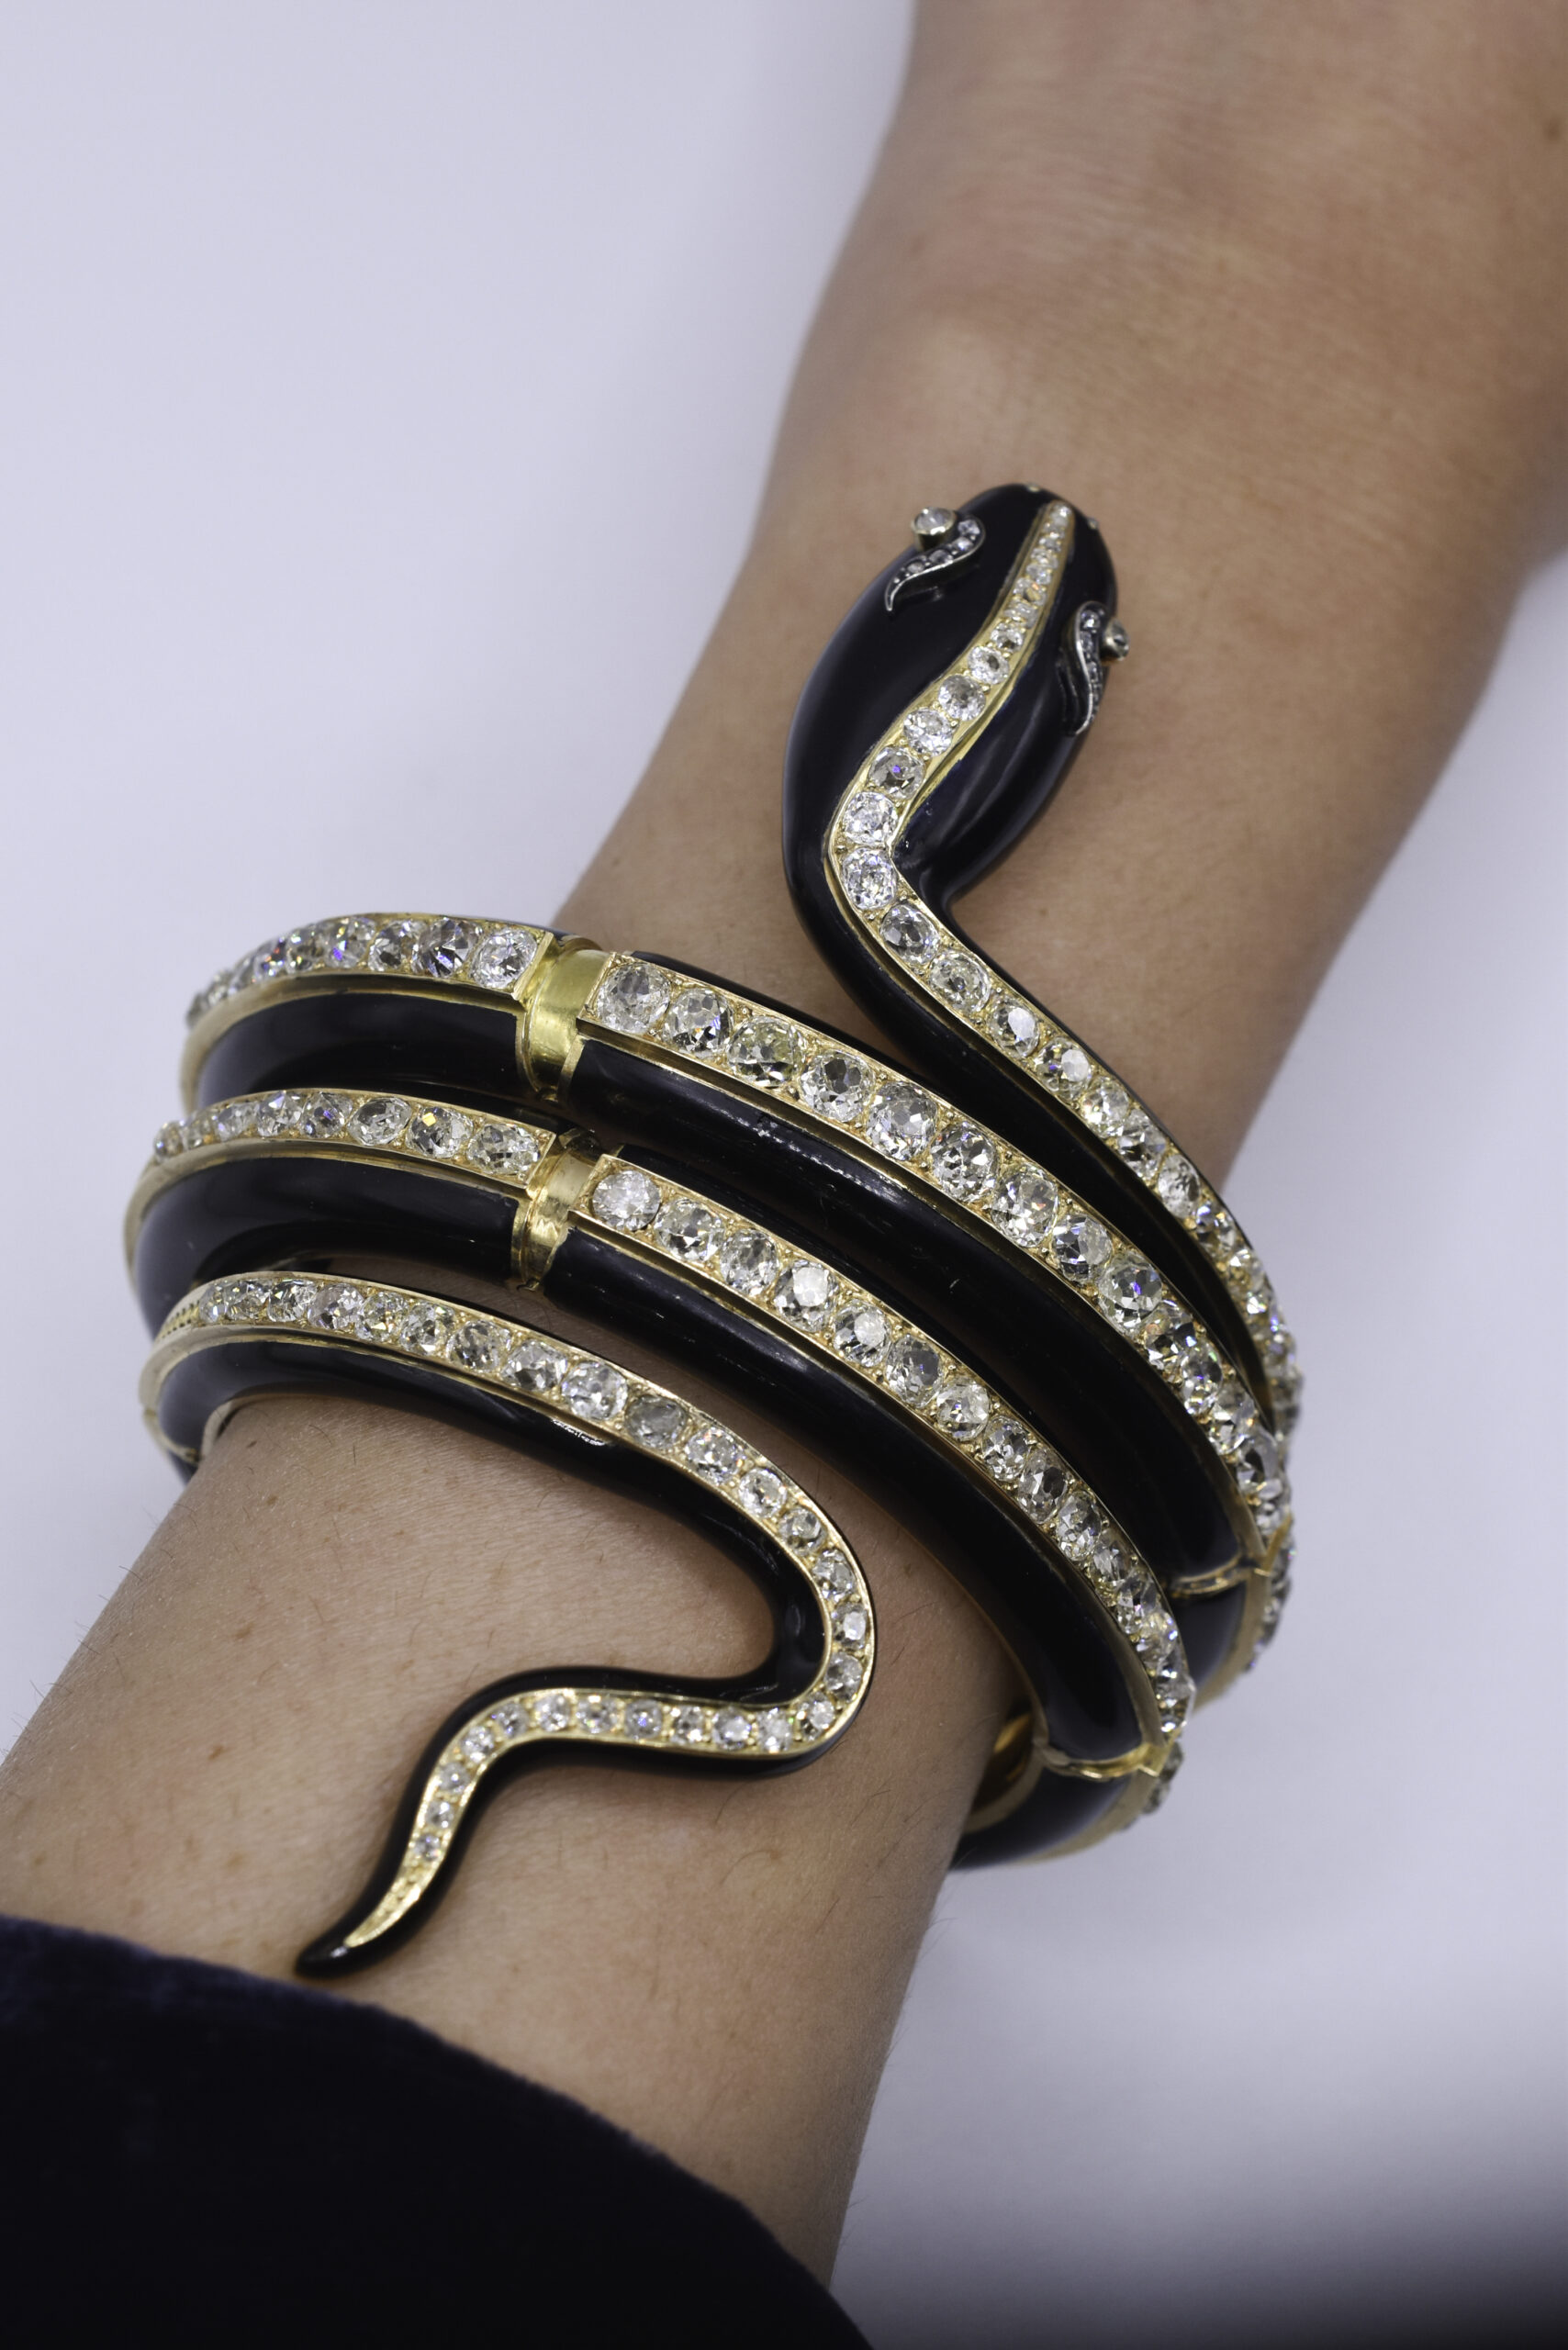 Antique Victorian 18k Gold & Black Enamel Diamond Snake Bracelet - Eleuteri